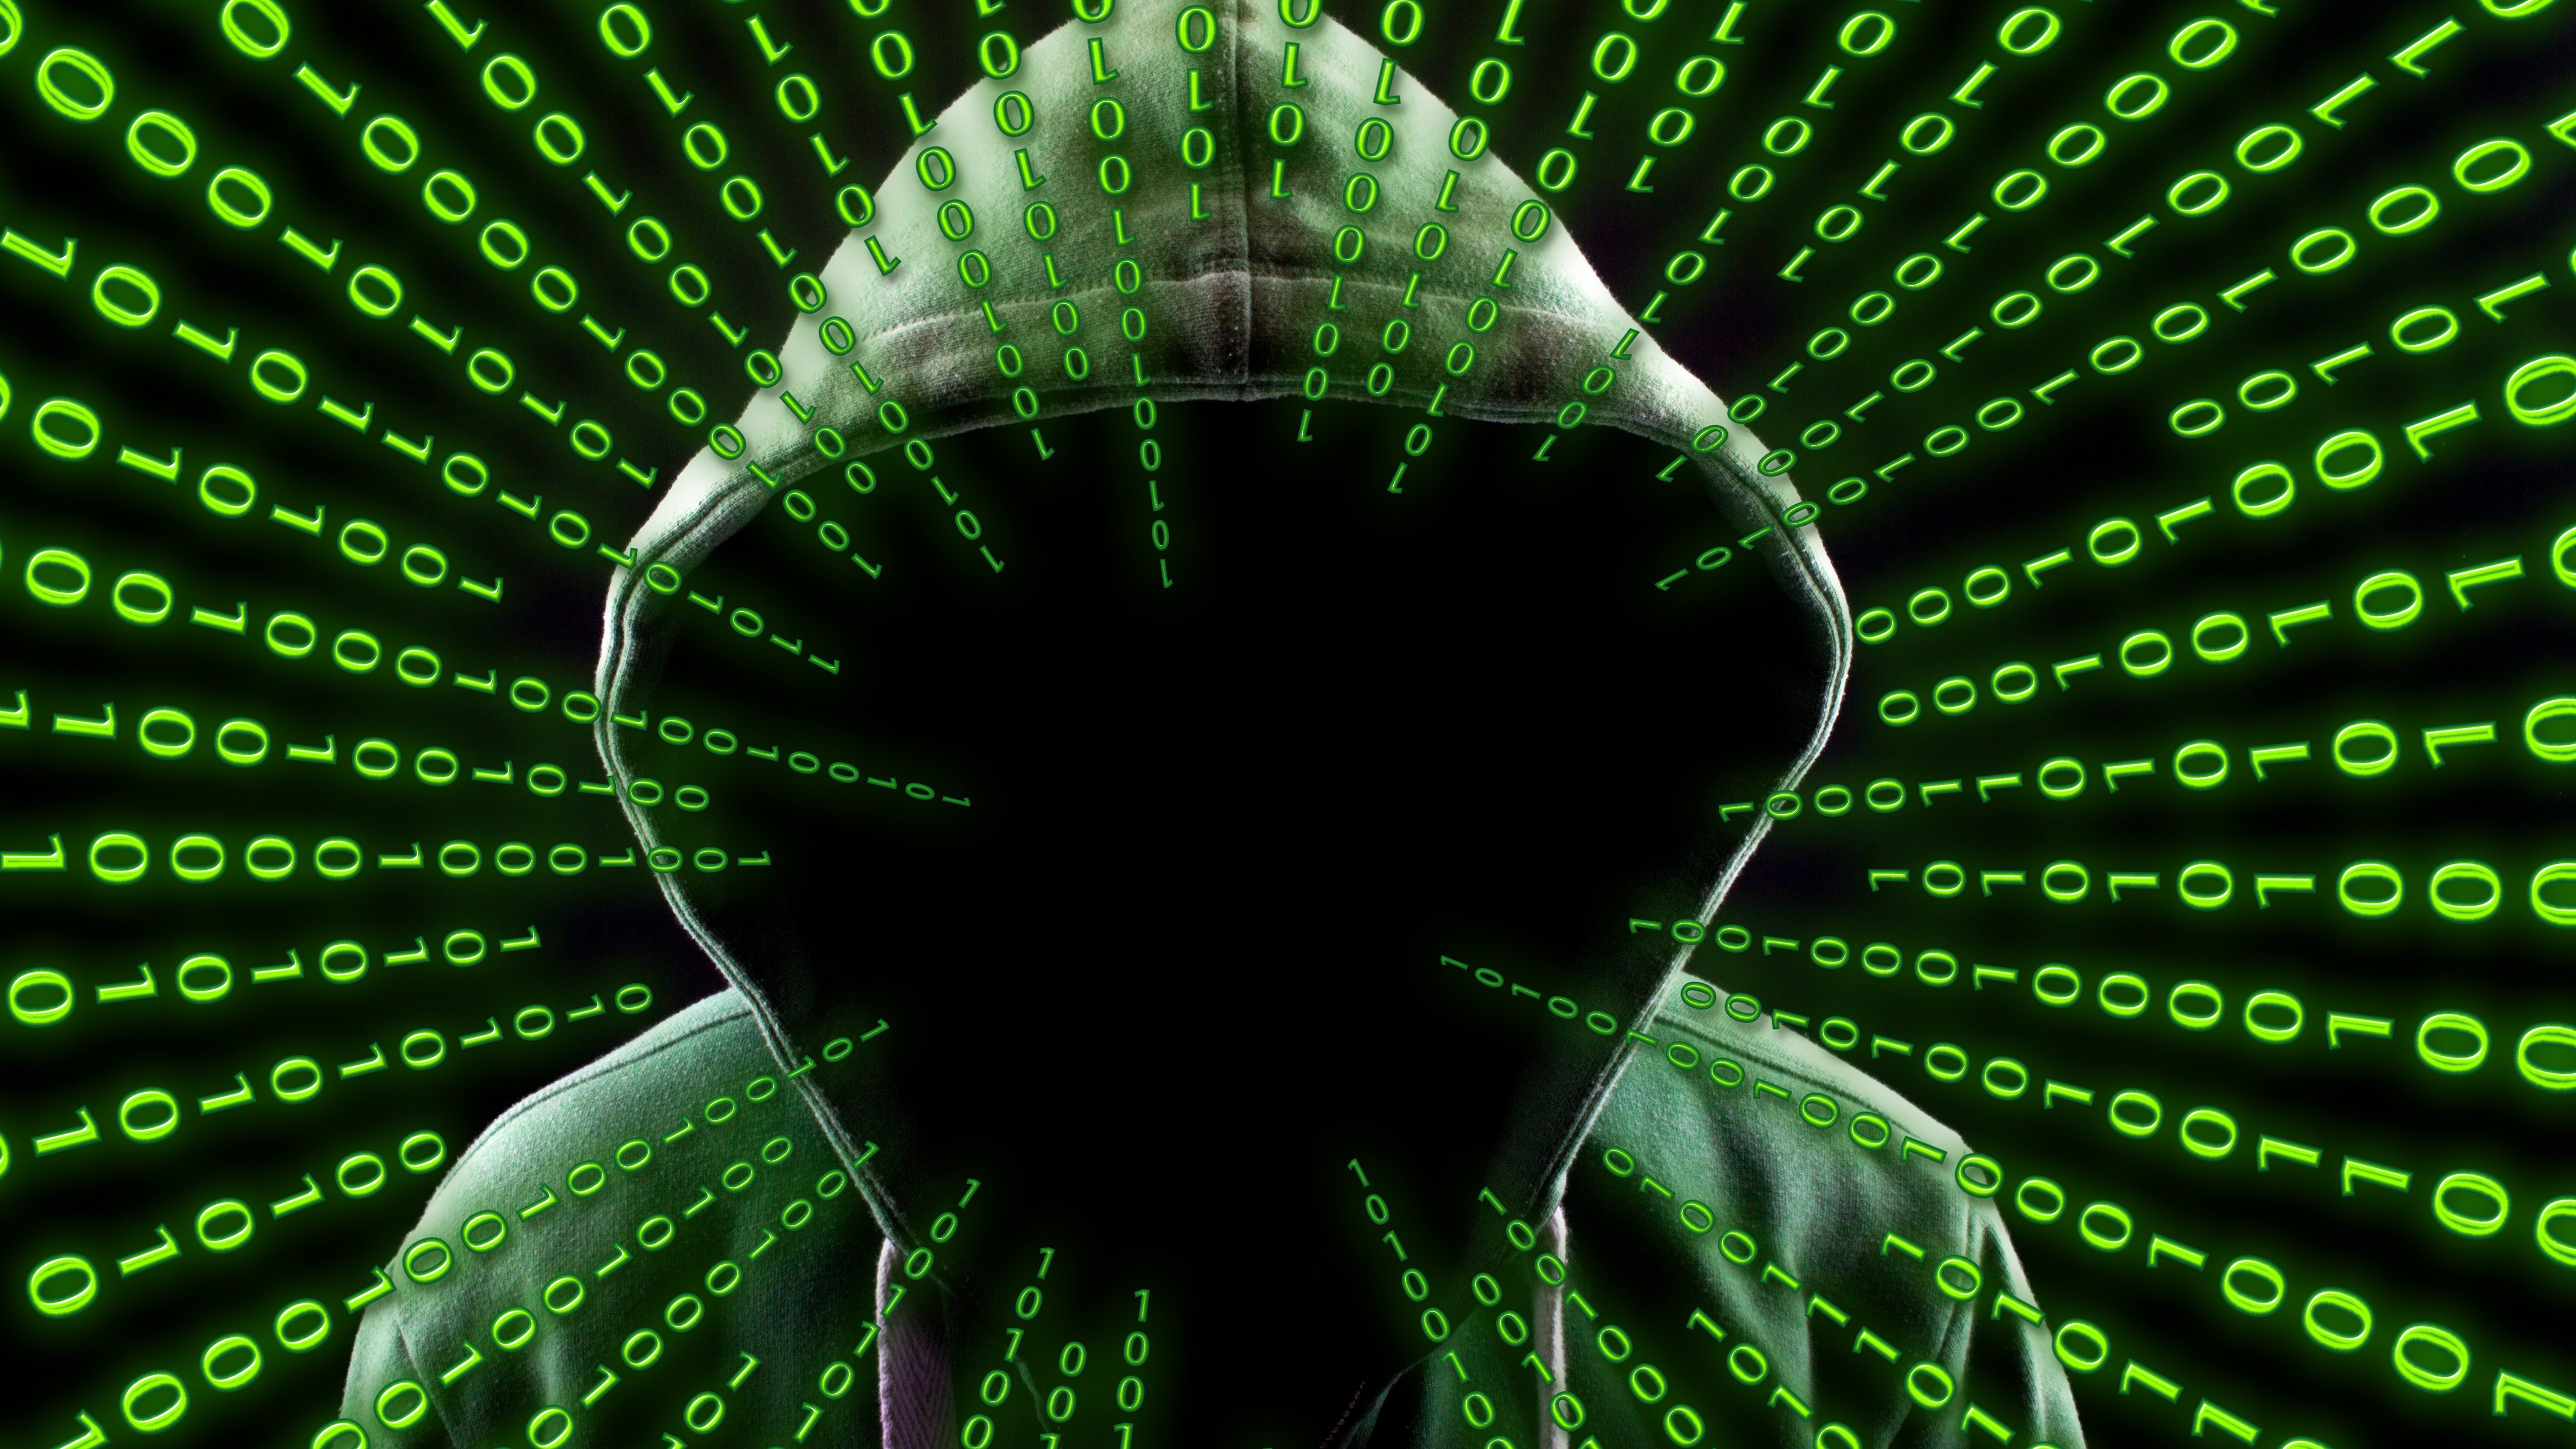 General 5120x2880 Anonymous (hacker group) green 4chan digital art hackers hoods faceless